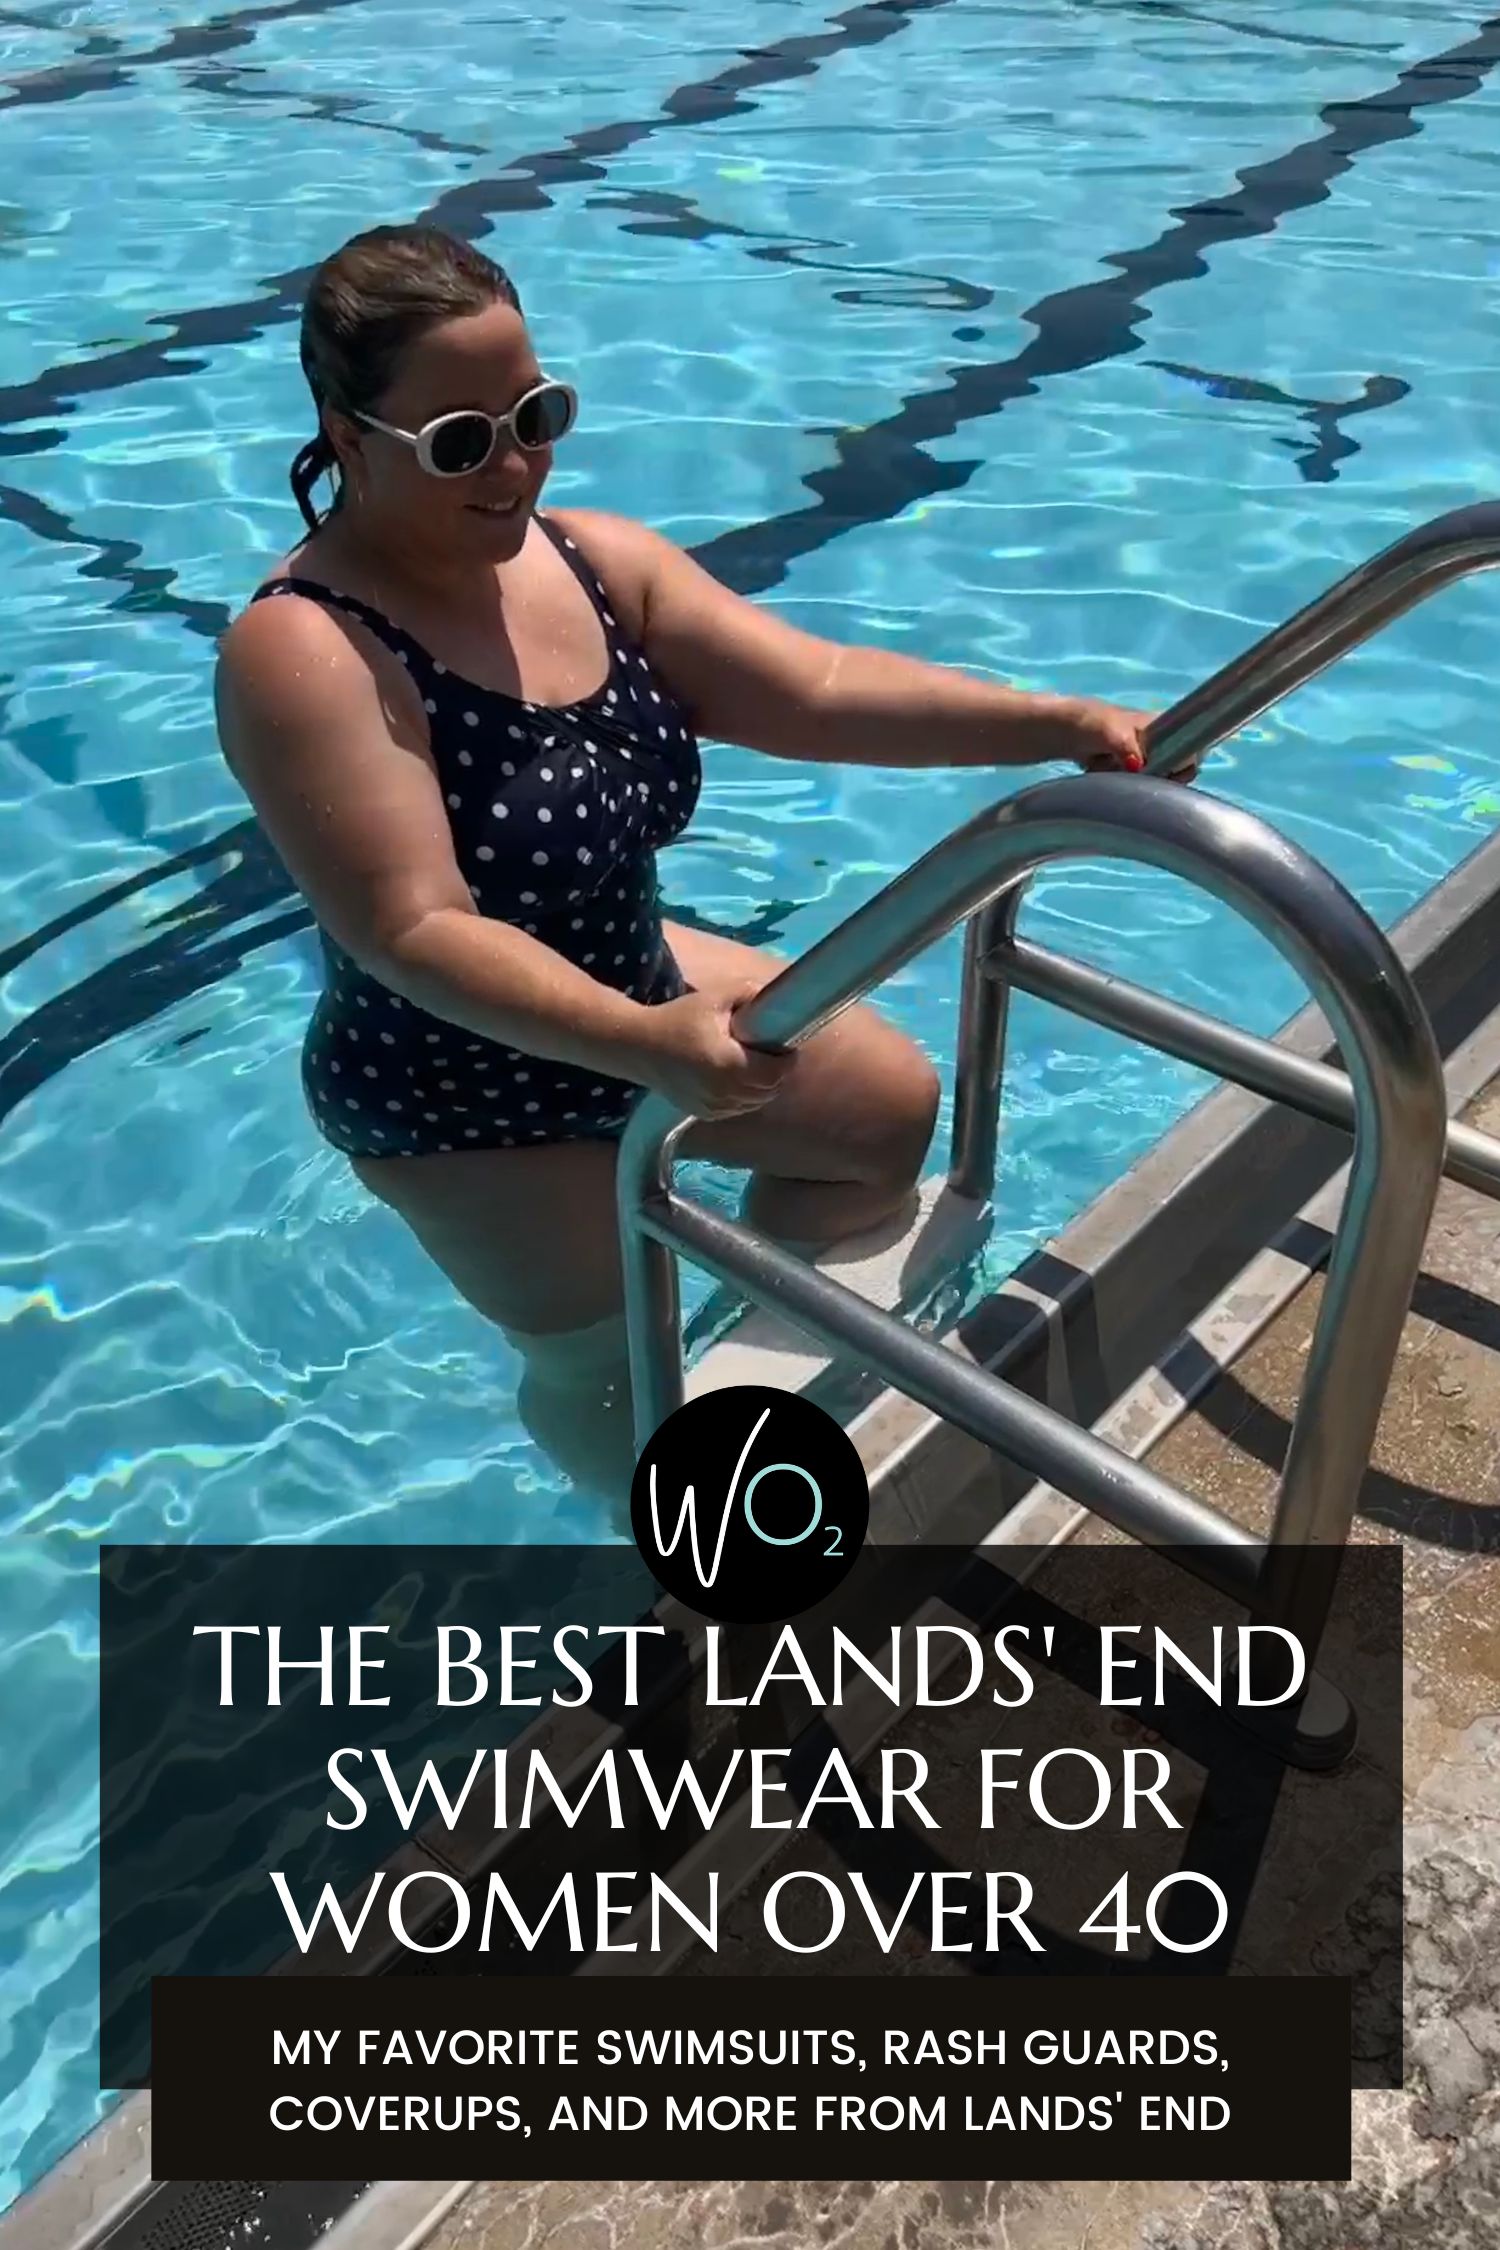 Swimwear Review: Lands' End DDD-cup Beach Living Sweetheart Bikini